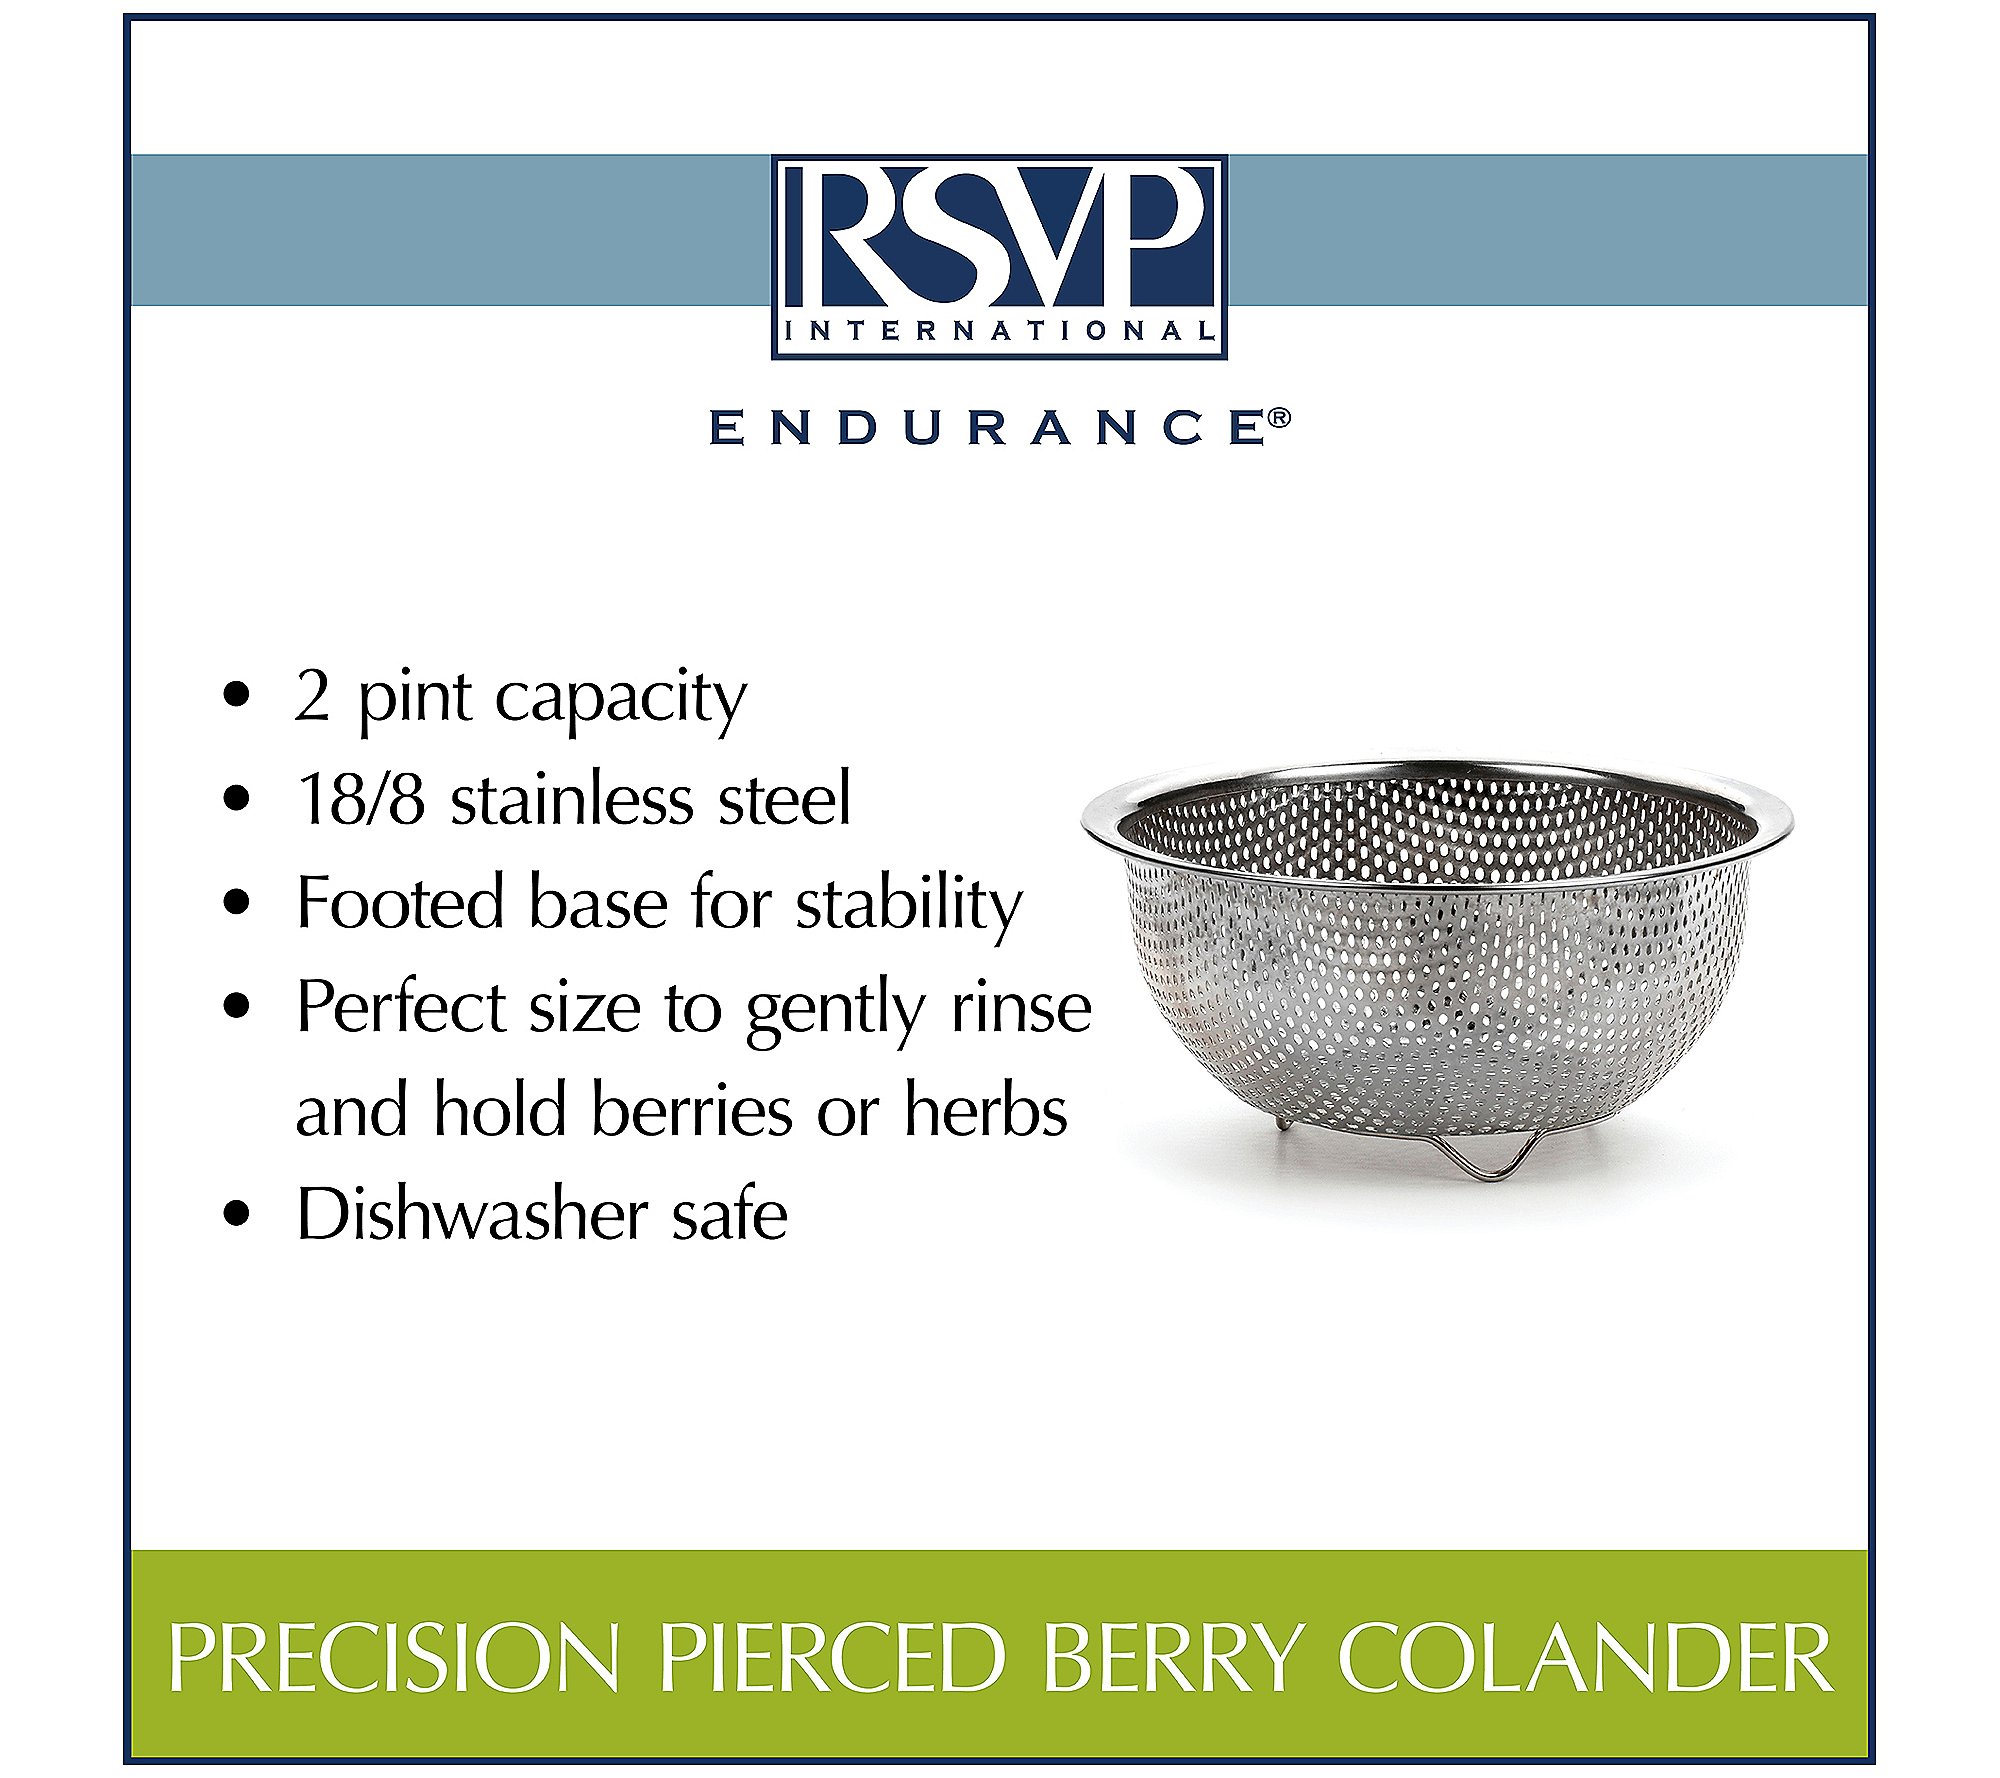 RSVP Endurance Precision Pierced Berry Colander